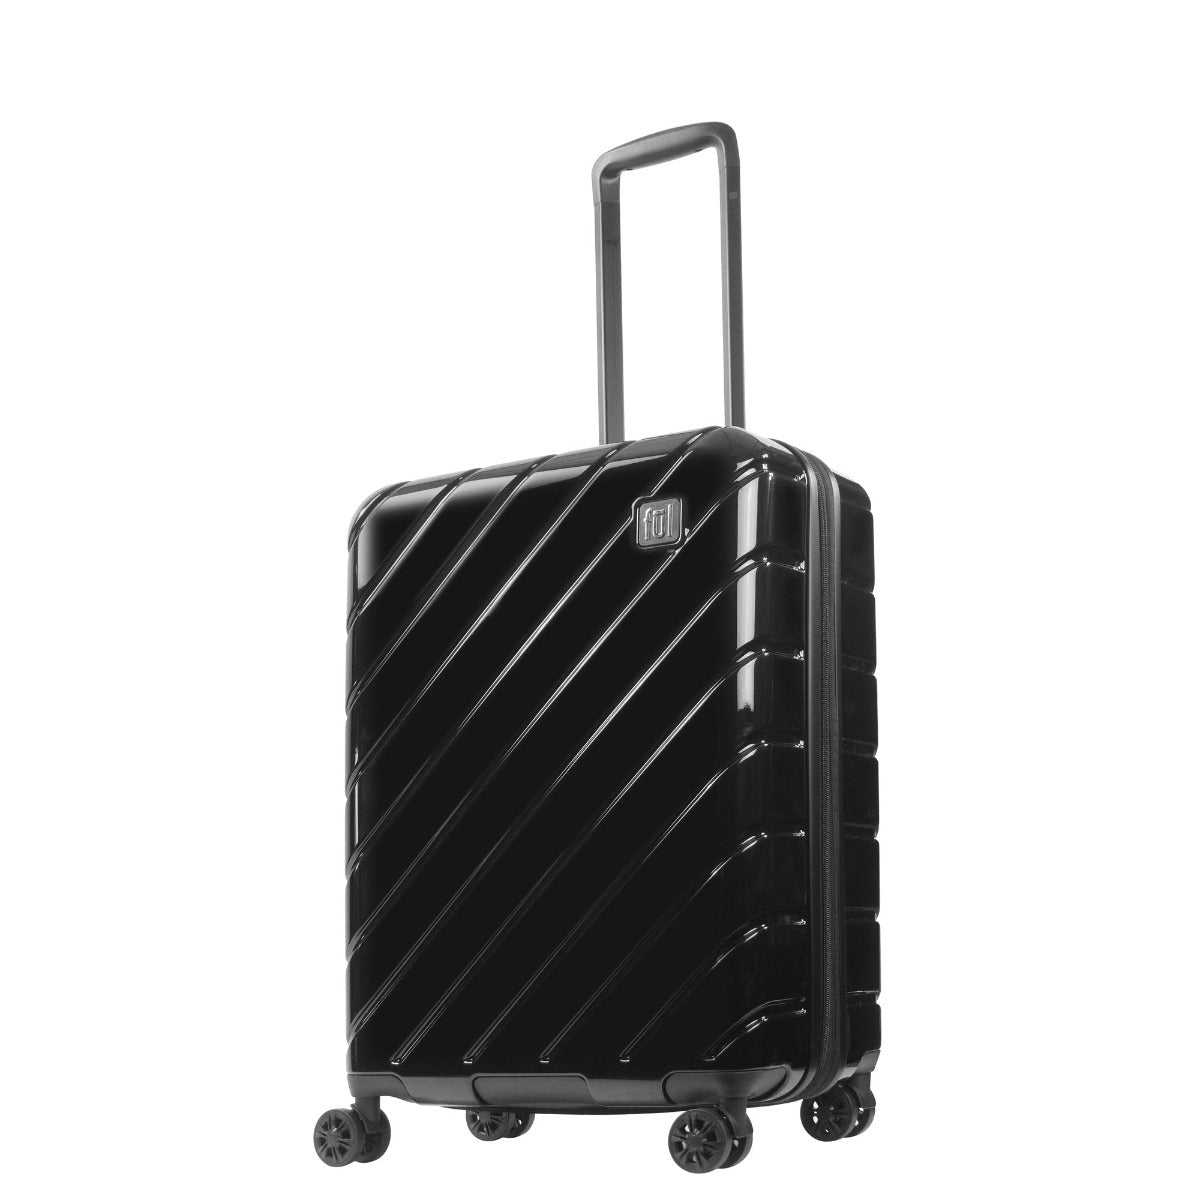 Velocity 27 inch hardside spinner suitcase black checked luggage